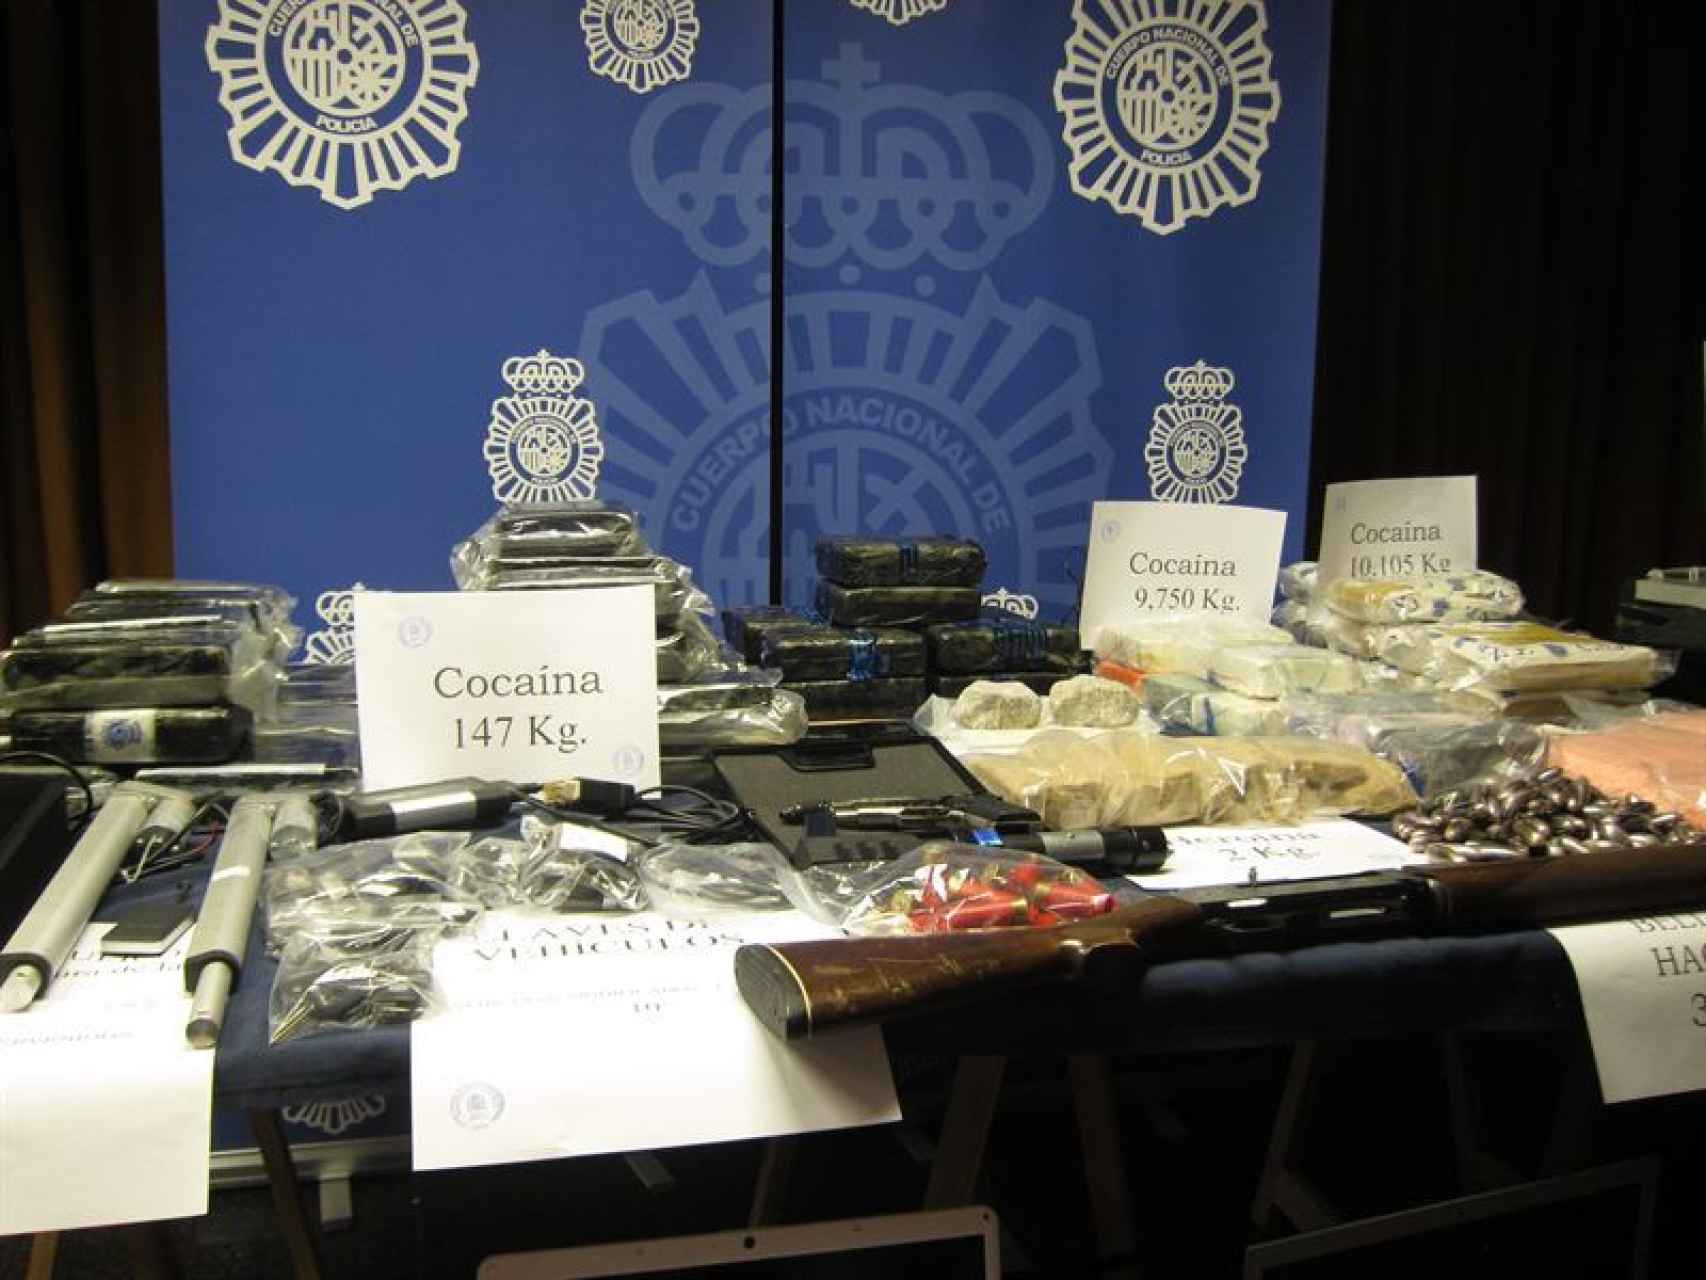 Cantidades de droga incautadas en una operación policial.